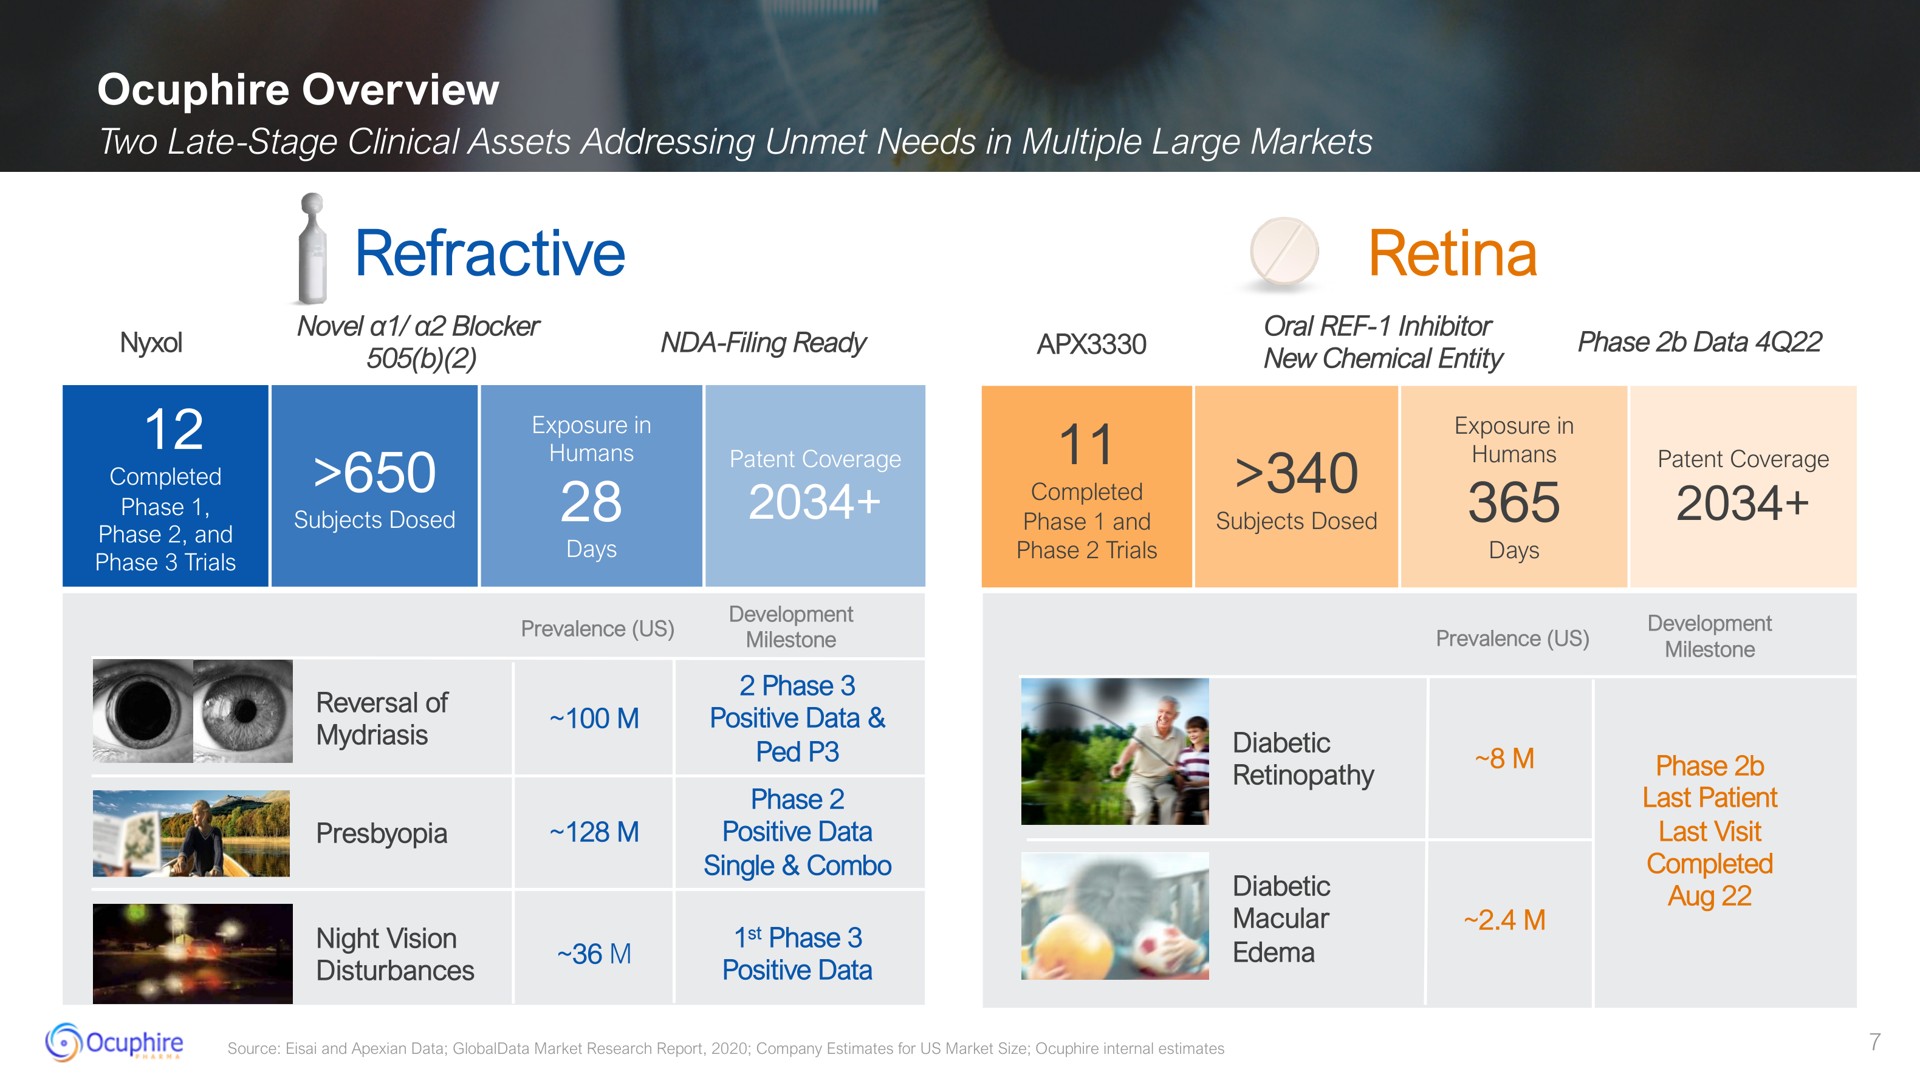 overview refractive retina crag positive data ped | Ocuphire Pharma